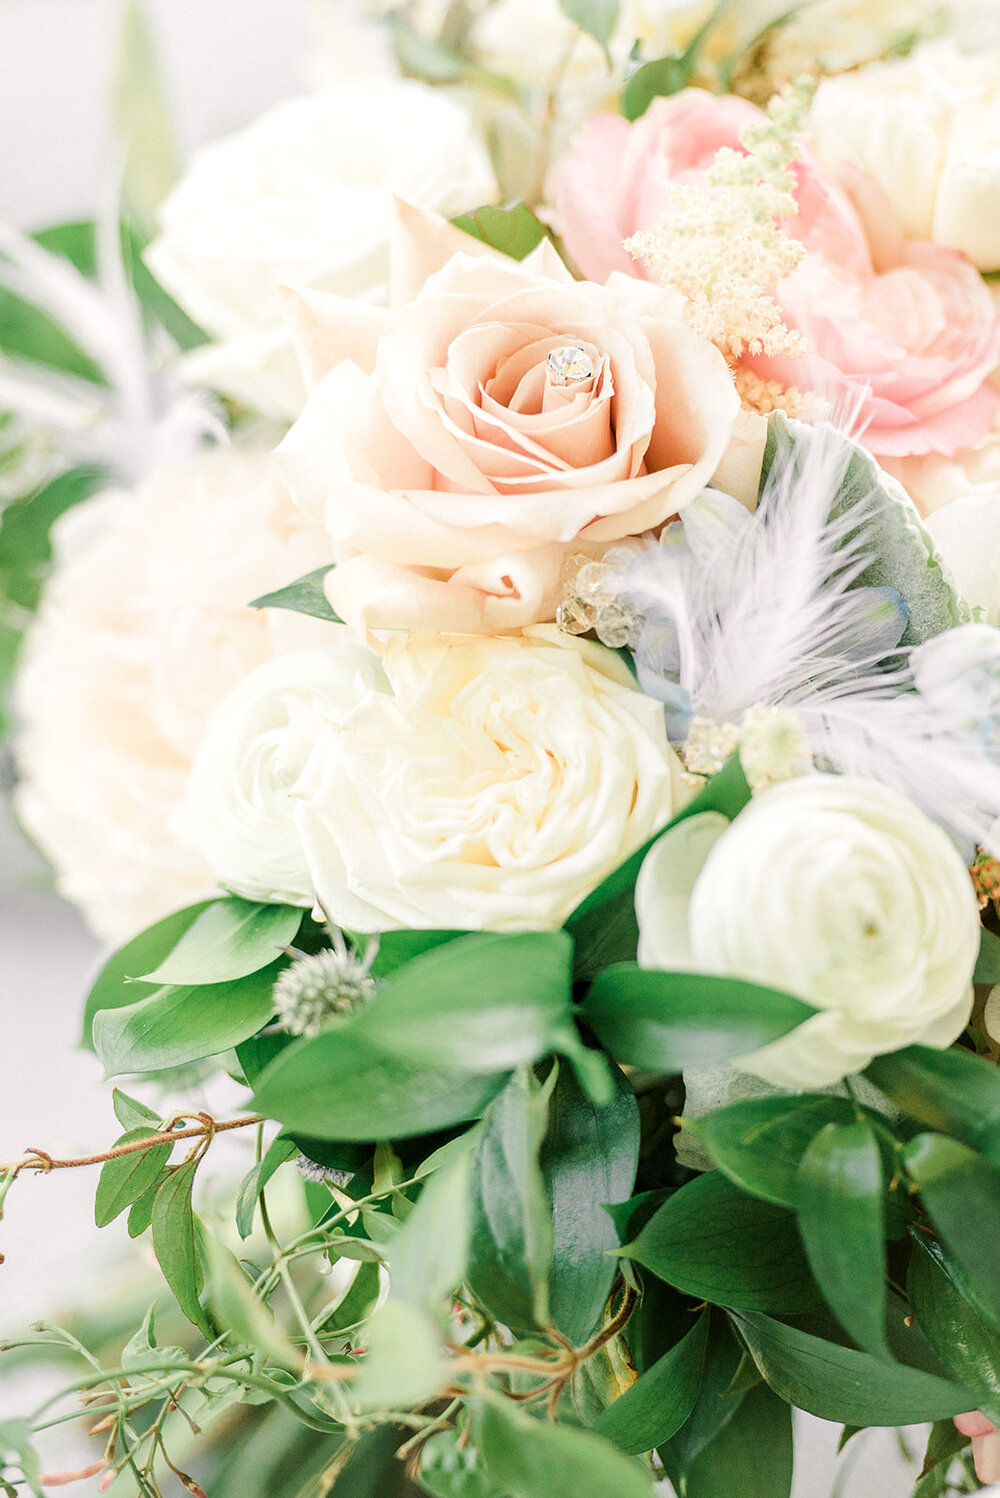 Violette-fleurs-roseville-napa-california-luxury-florist-silverado-resort-and-spa- weddings-by-scott-and-dana-quicksand-white-ranunculus-blush-pink-bridal-bouquet.jpg